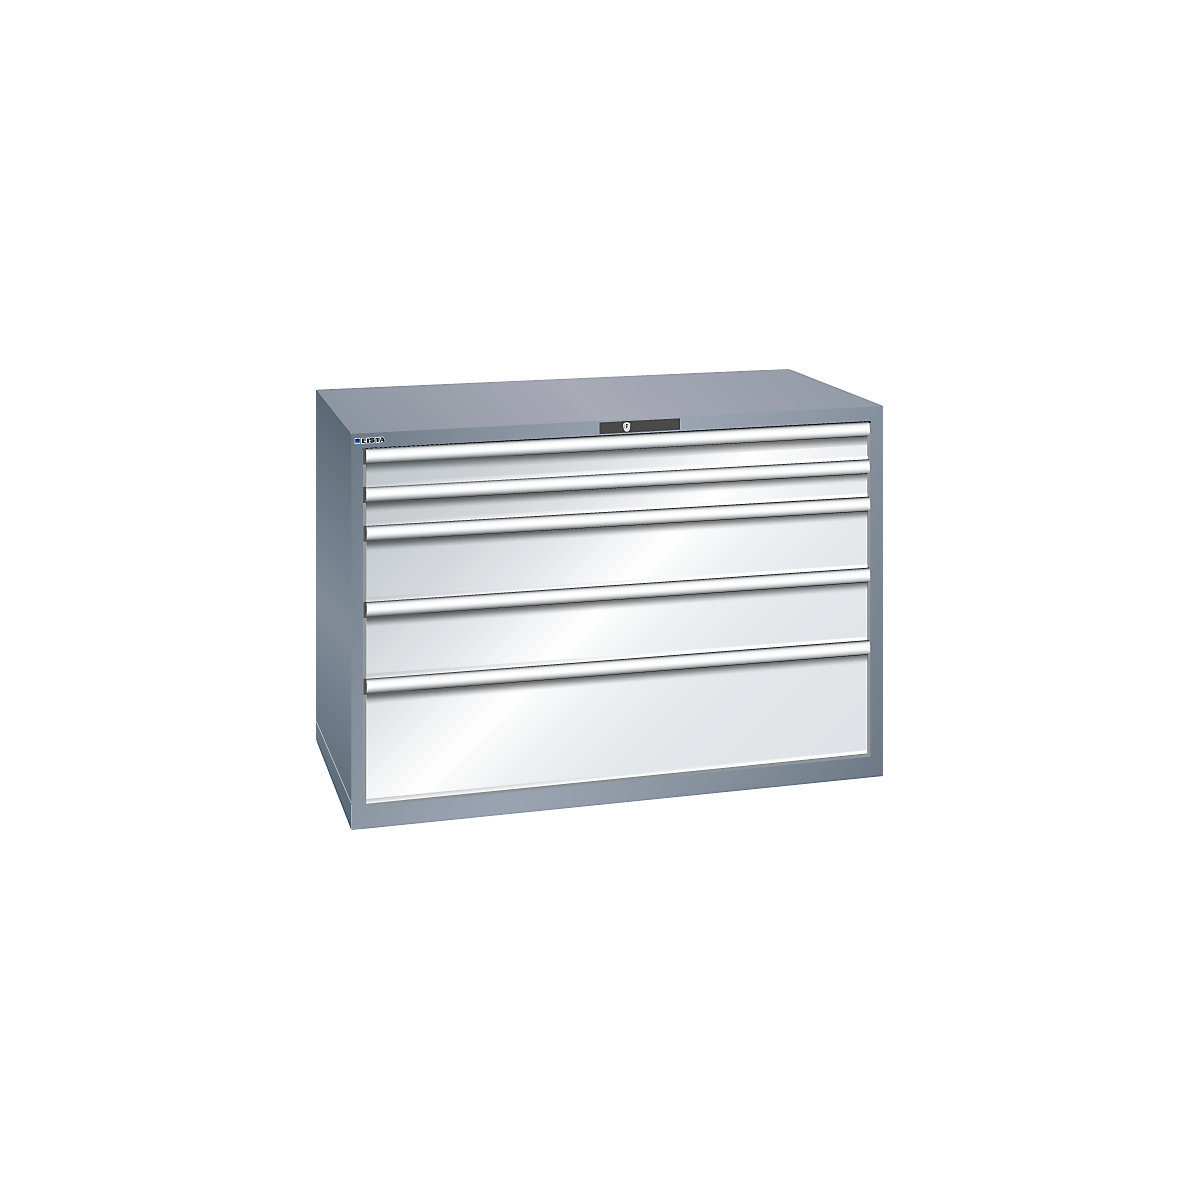 Drawer cupboard, 5 drawers – LISTA, WxDxH 1431 x 725 x 1000 mm, grey metallic / light grey-11